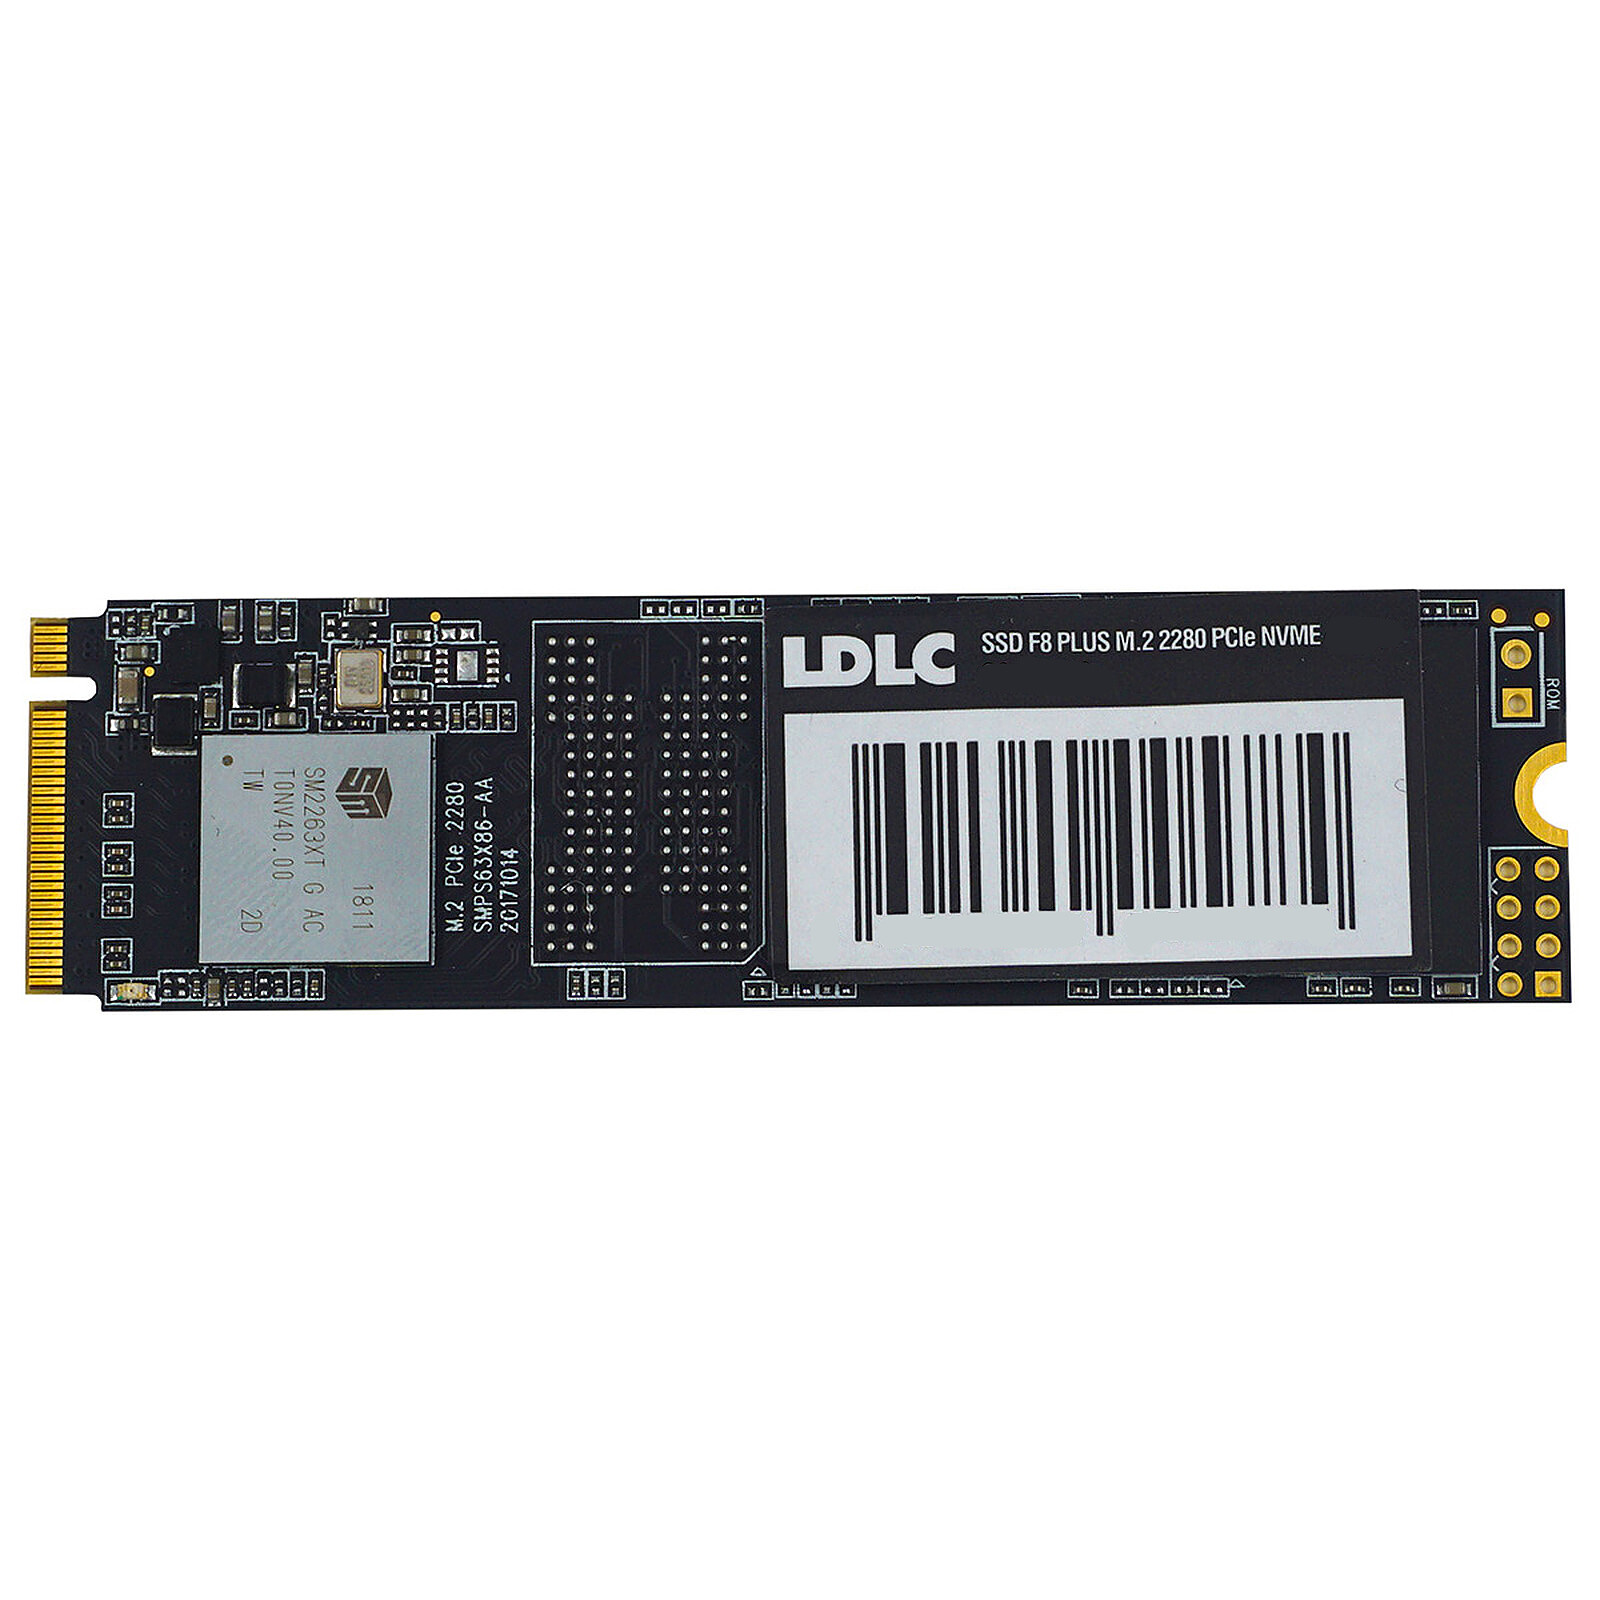 LDLC SSD F8 PLUS M.2 2280 PCIE NVME 960 GB - Disque SSD - Garantie